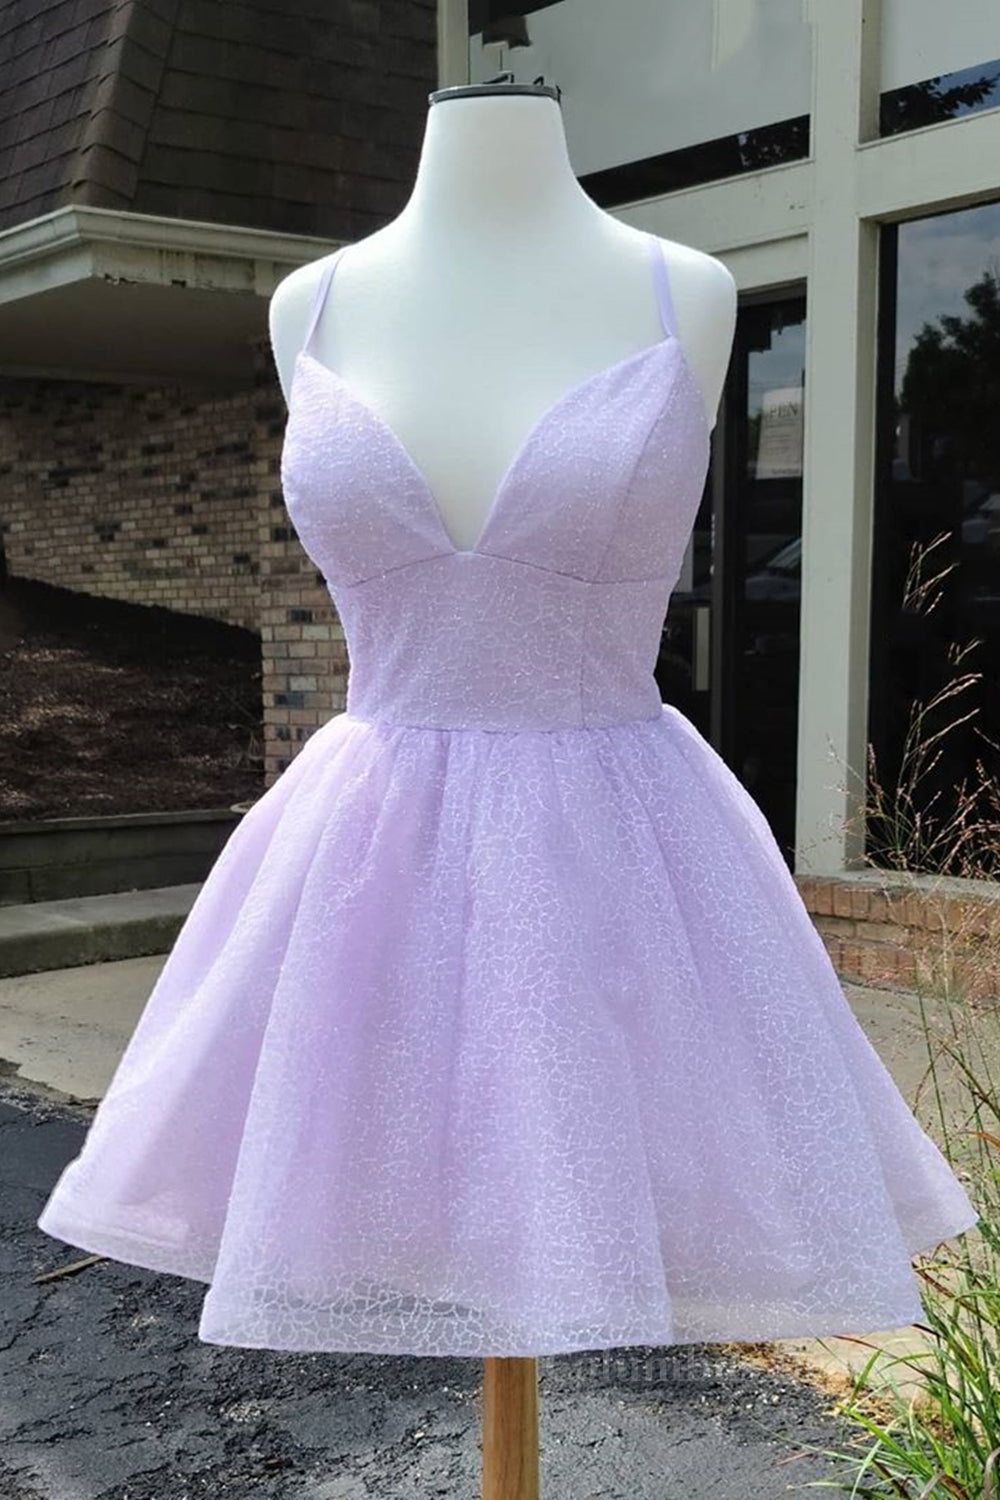 Shiny V Neck Lilac Short Corset Prom Dresses, Lilac Corset Homecoming Dresses outfit, Wedding Theme